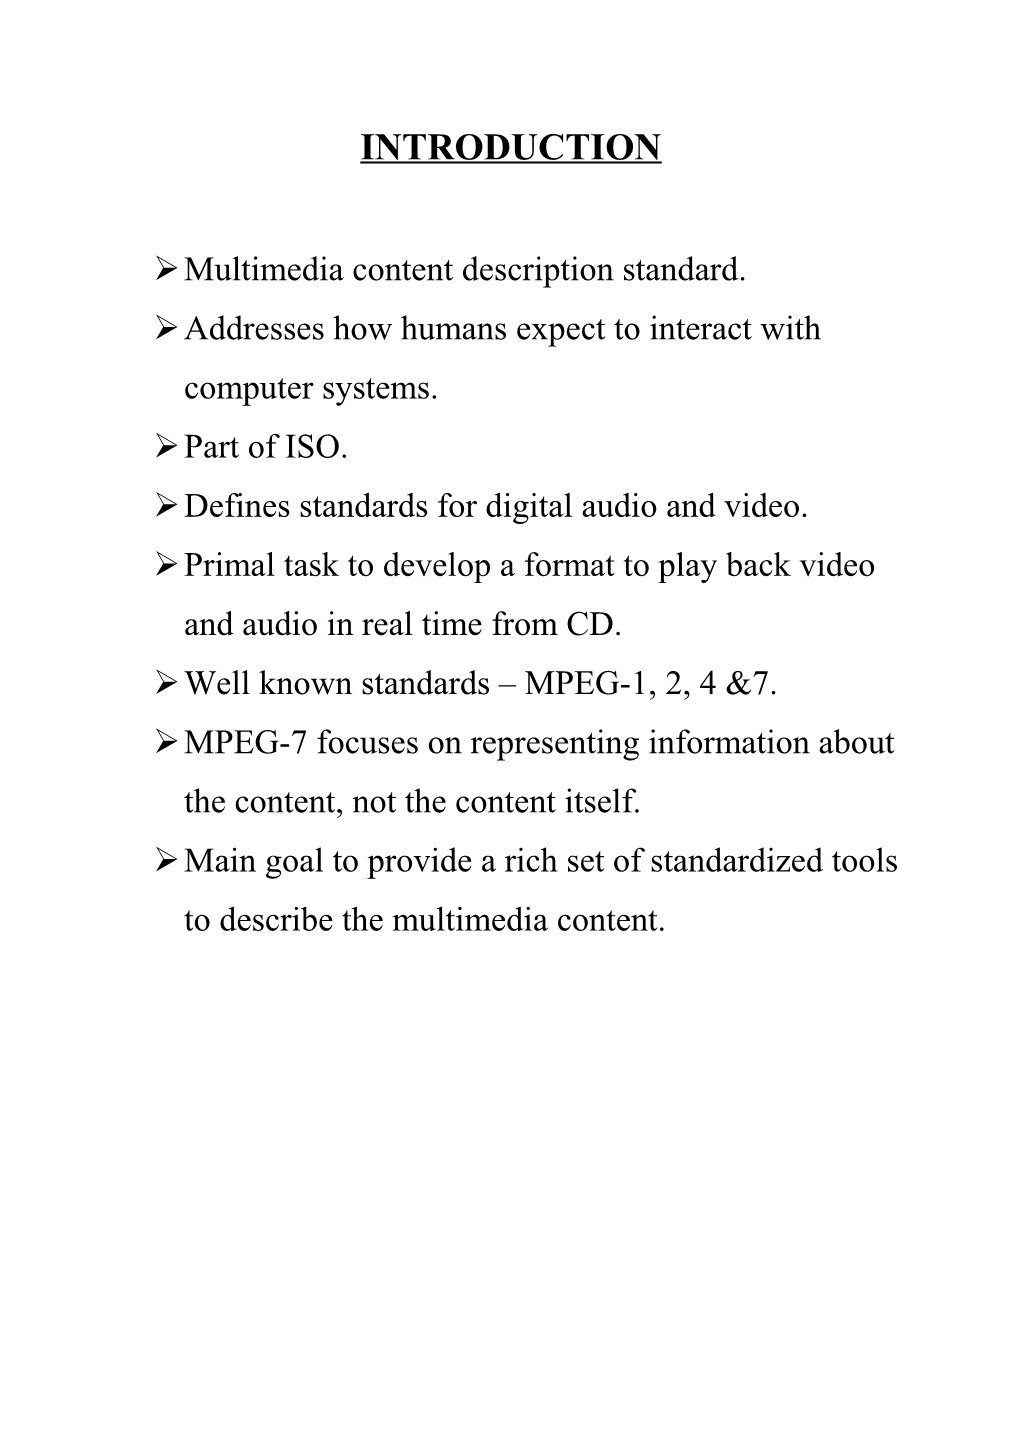 Ø Multimedia Content Description Standard